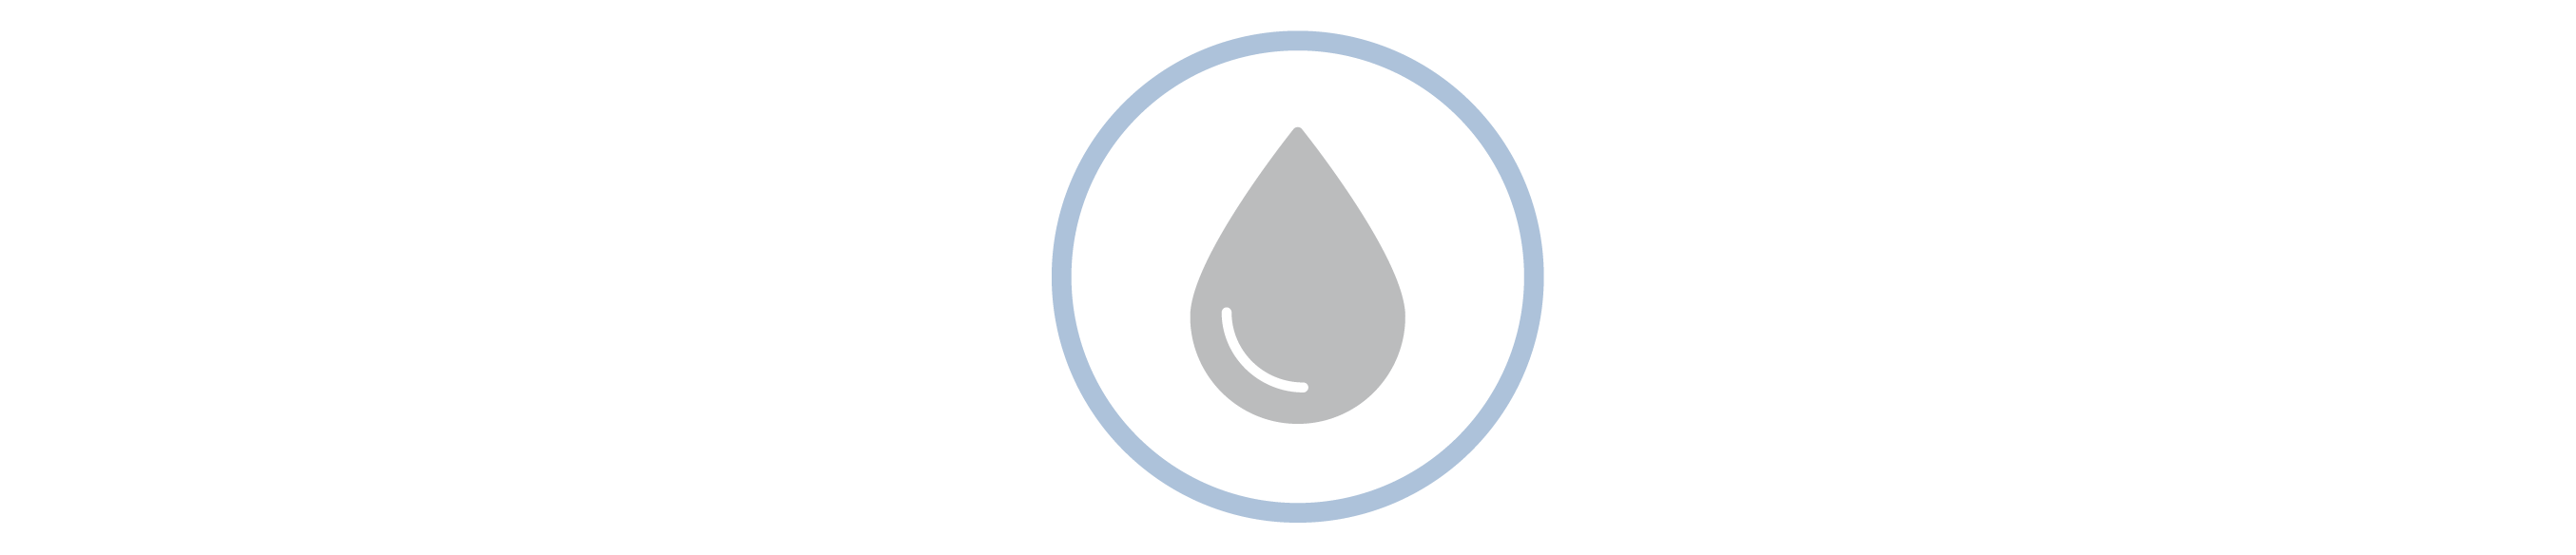 Damp Laboratory Symbol